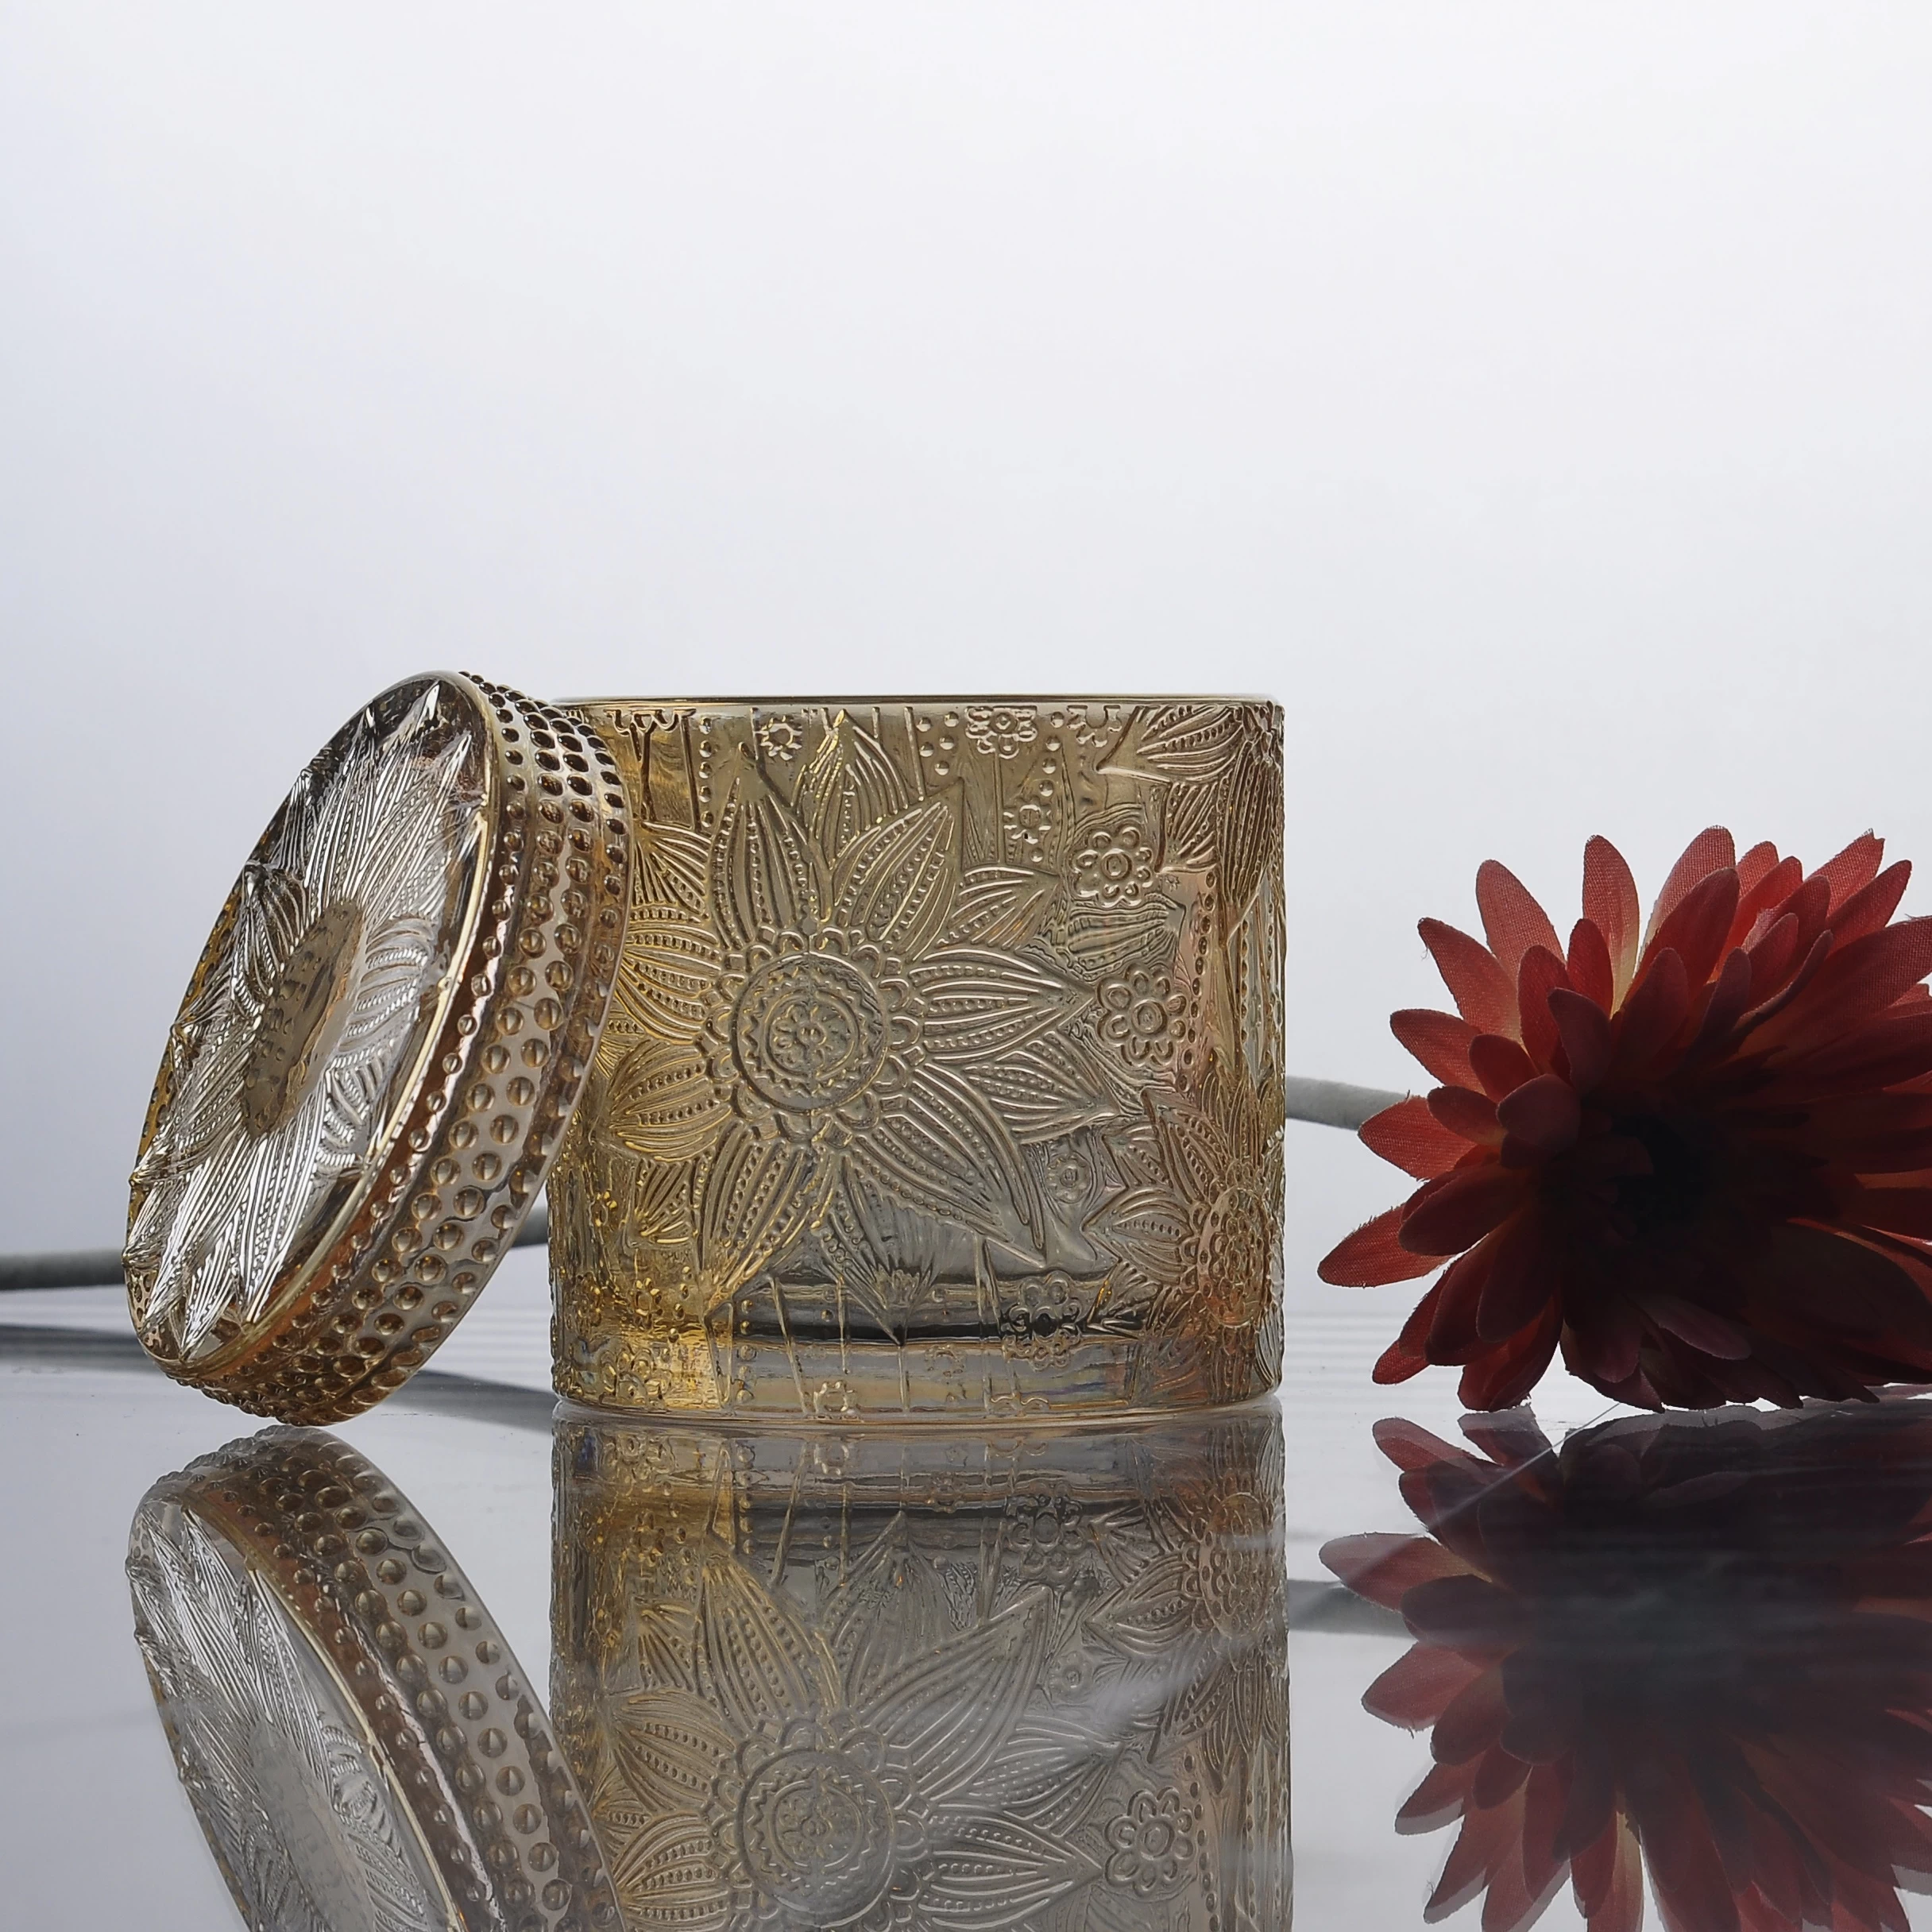 Bulk luxury custom crystal lotus cylinder glass candle holder with lid